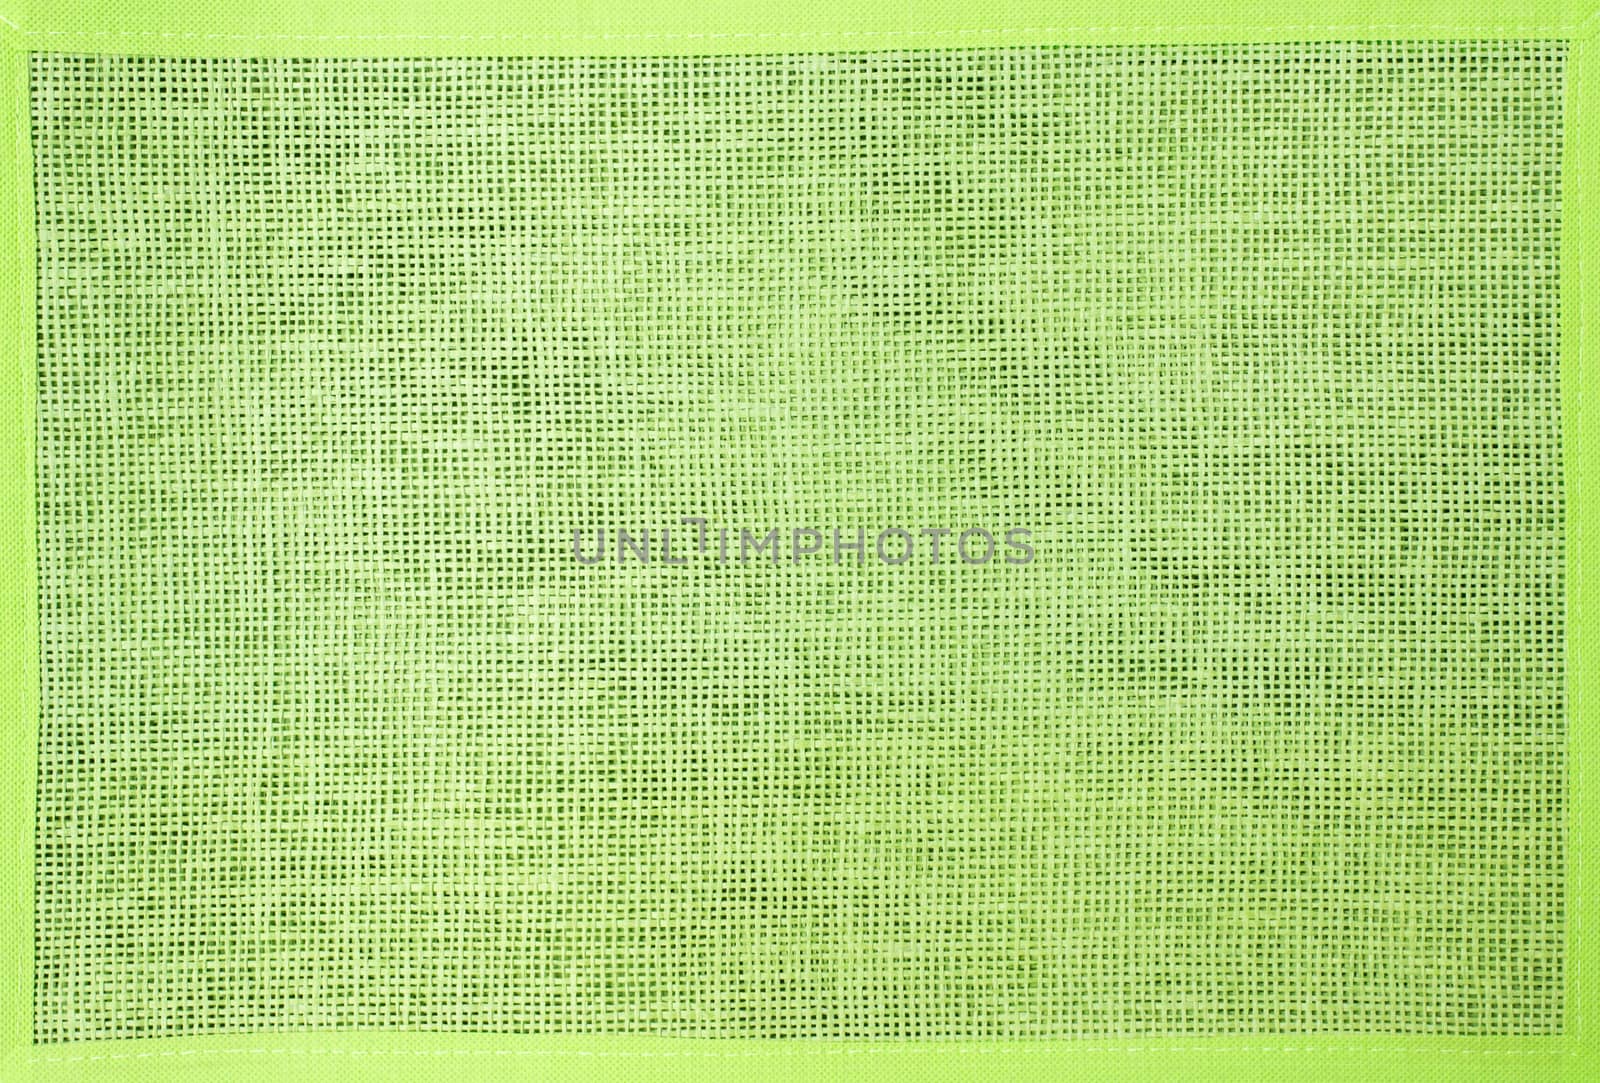 Green place mat, close up